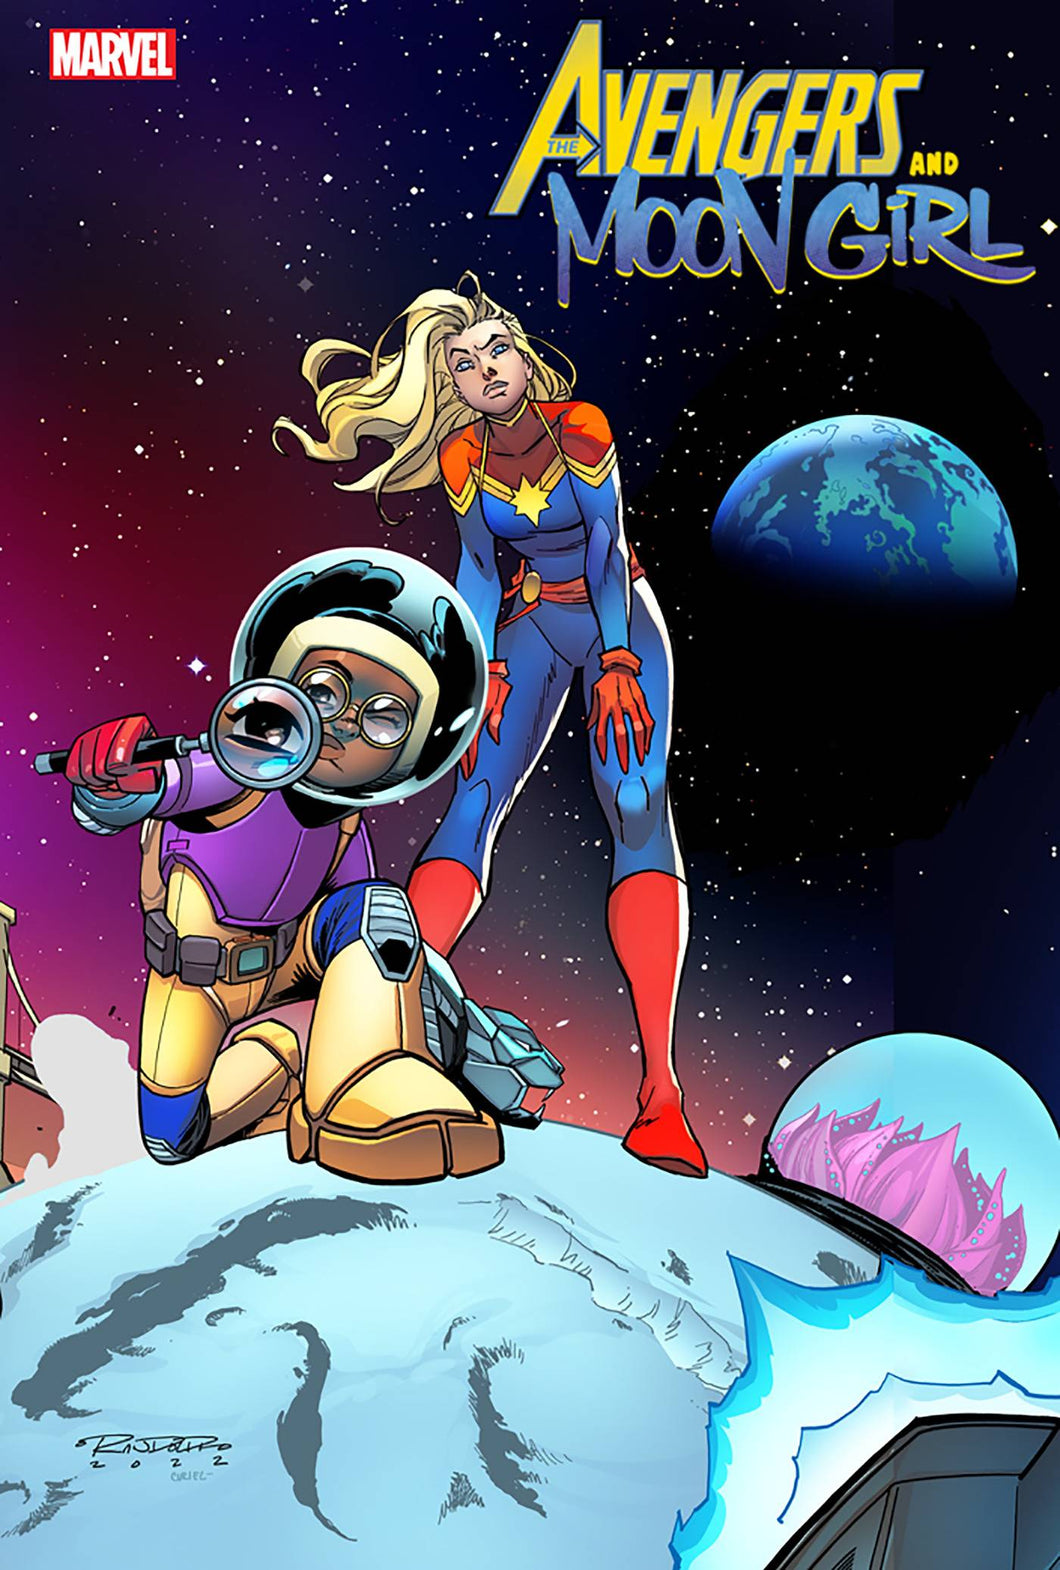 Marvel The Avengers & Moon Girl #1 Khary Randolph Variant